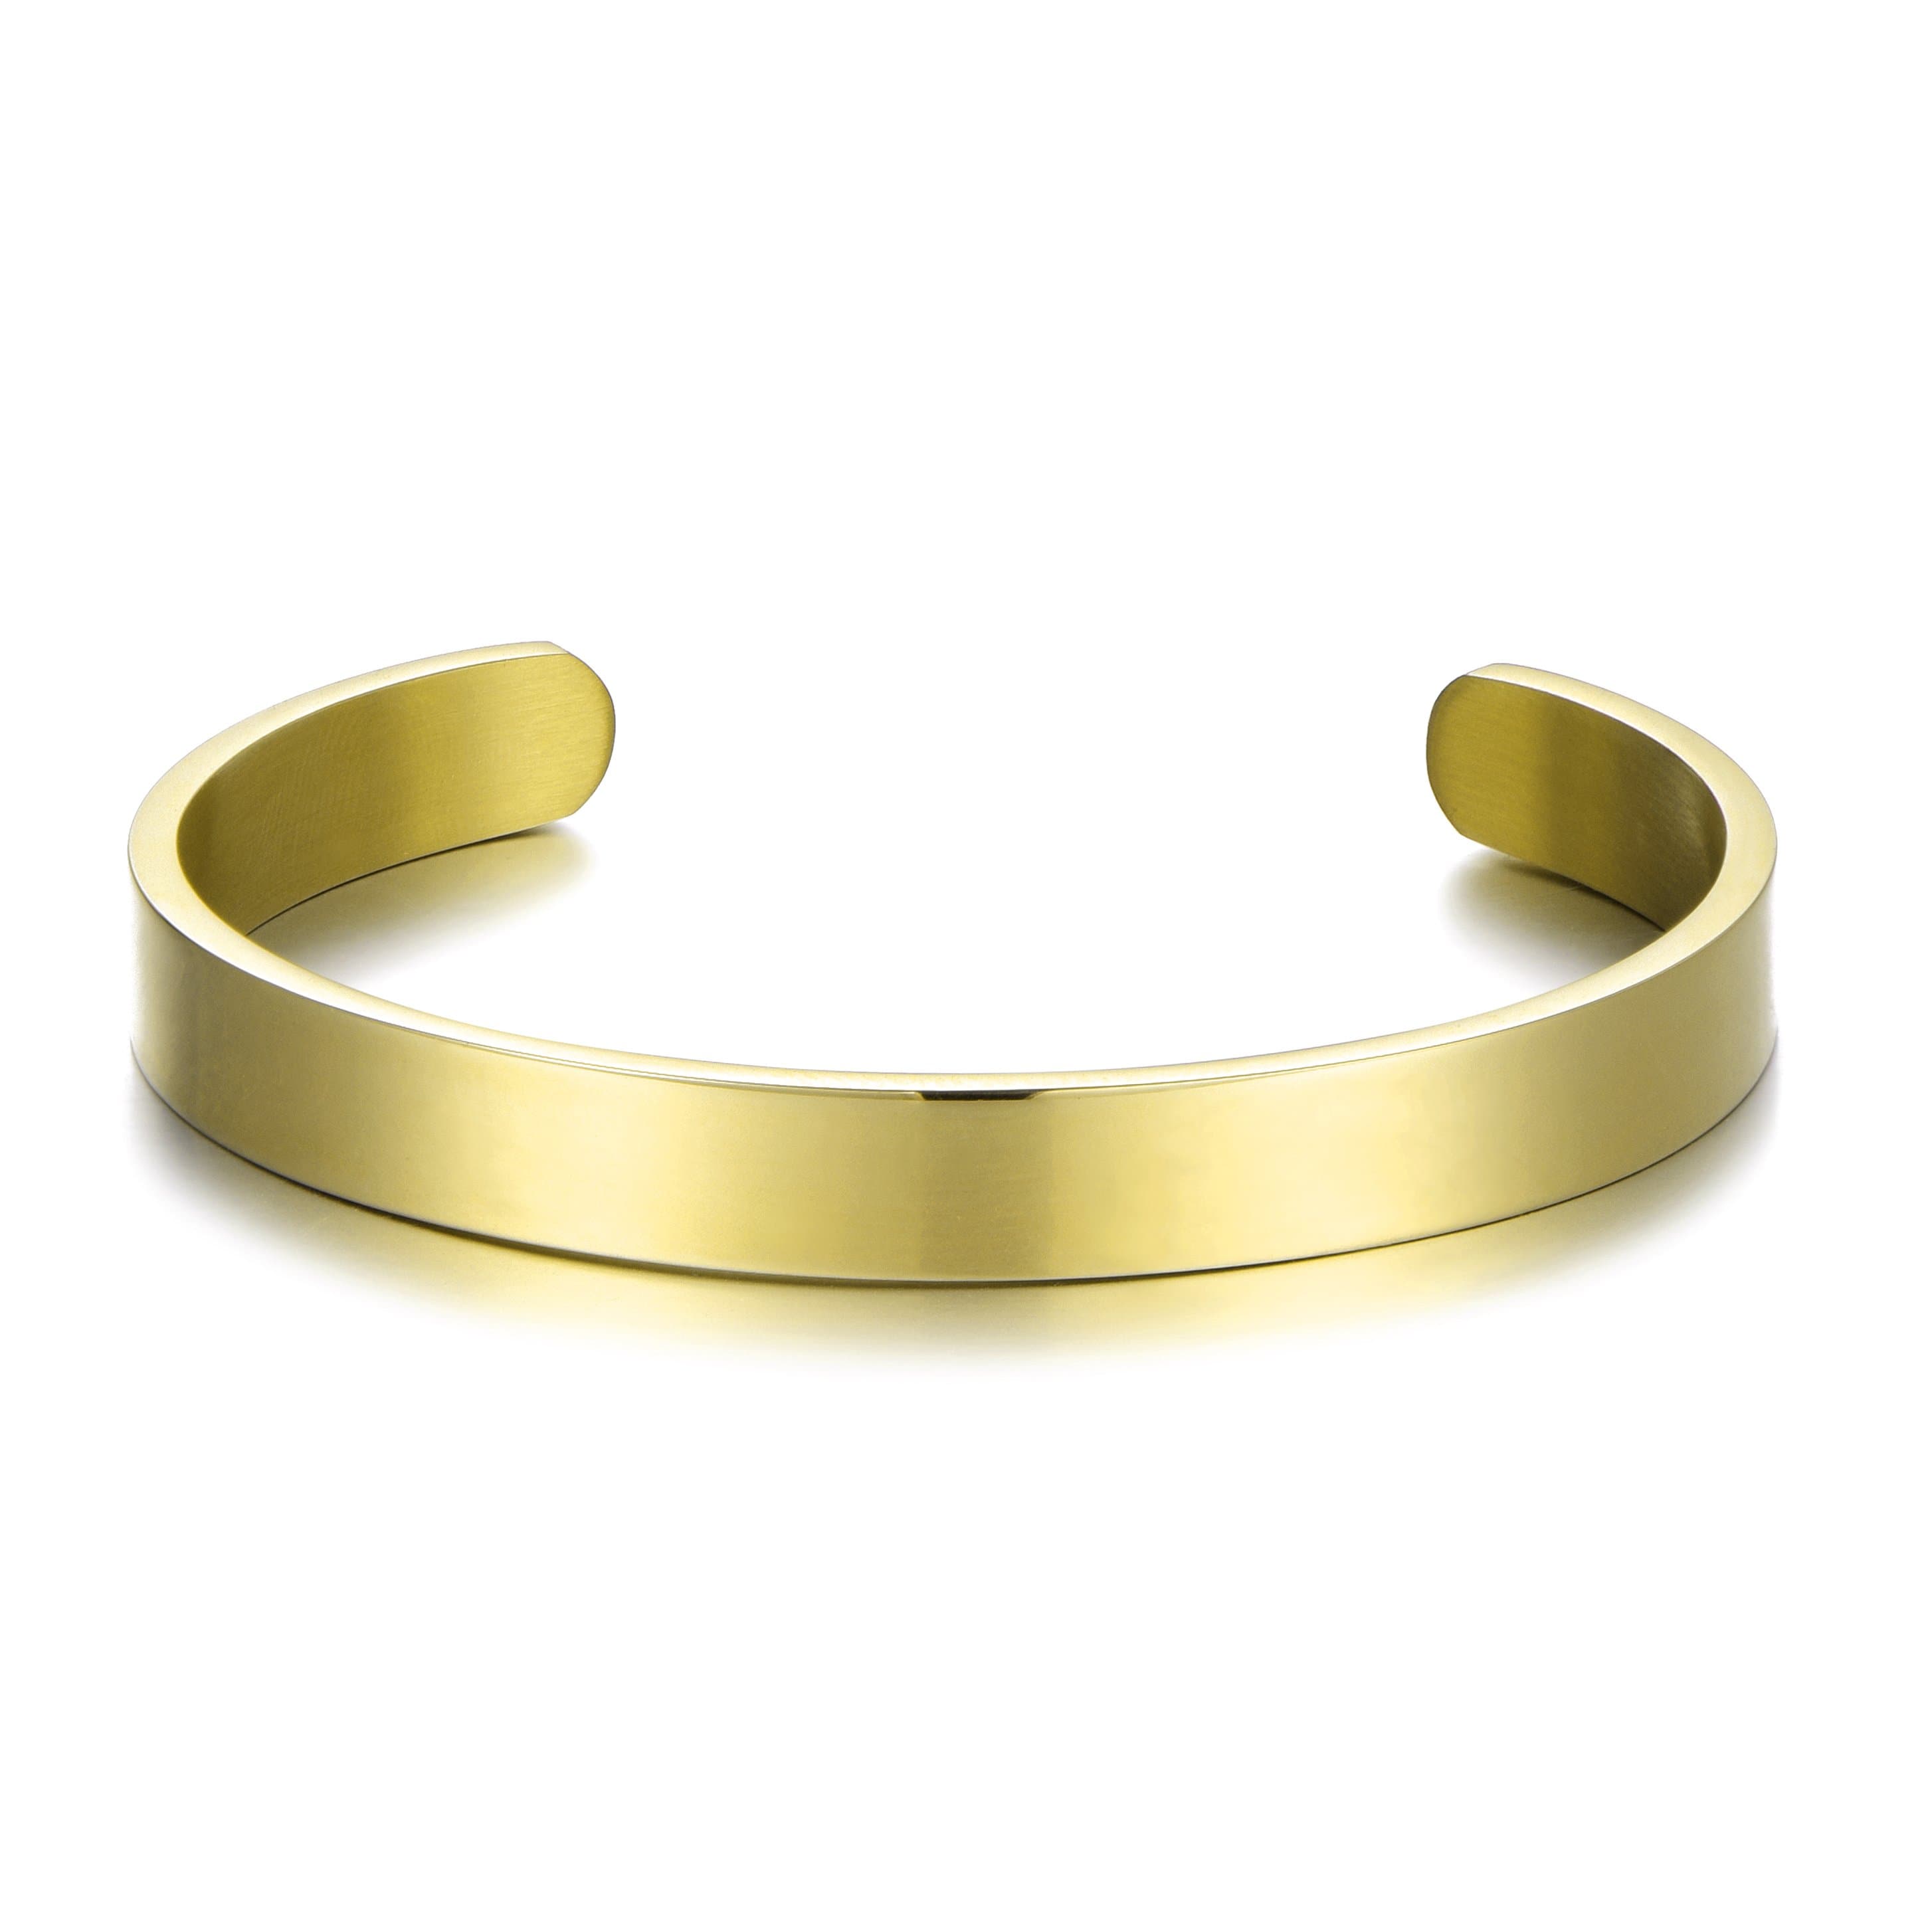 Men's Gold Plated Stainless Steel Cuff Bracelet by Philip Jones Jewellery